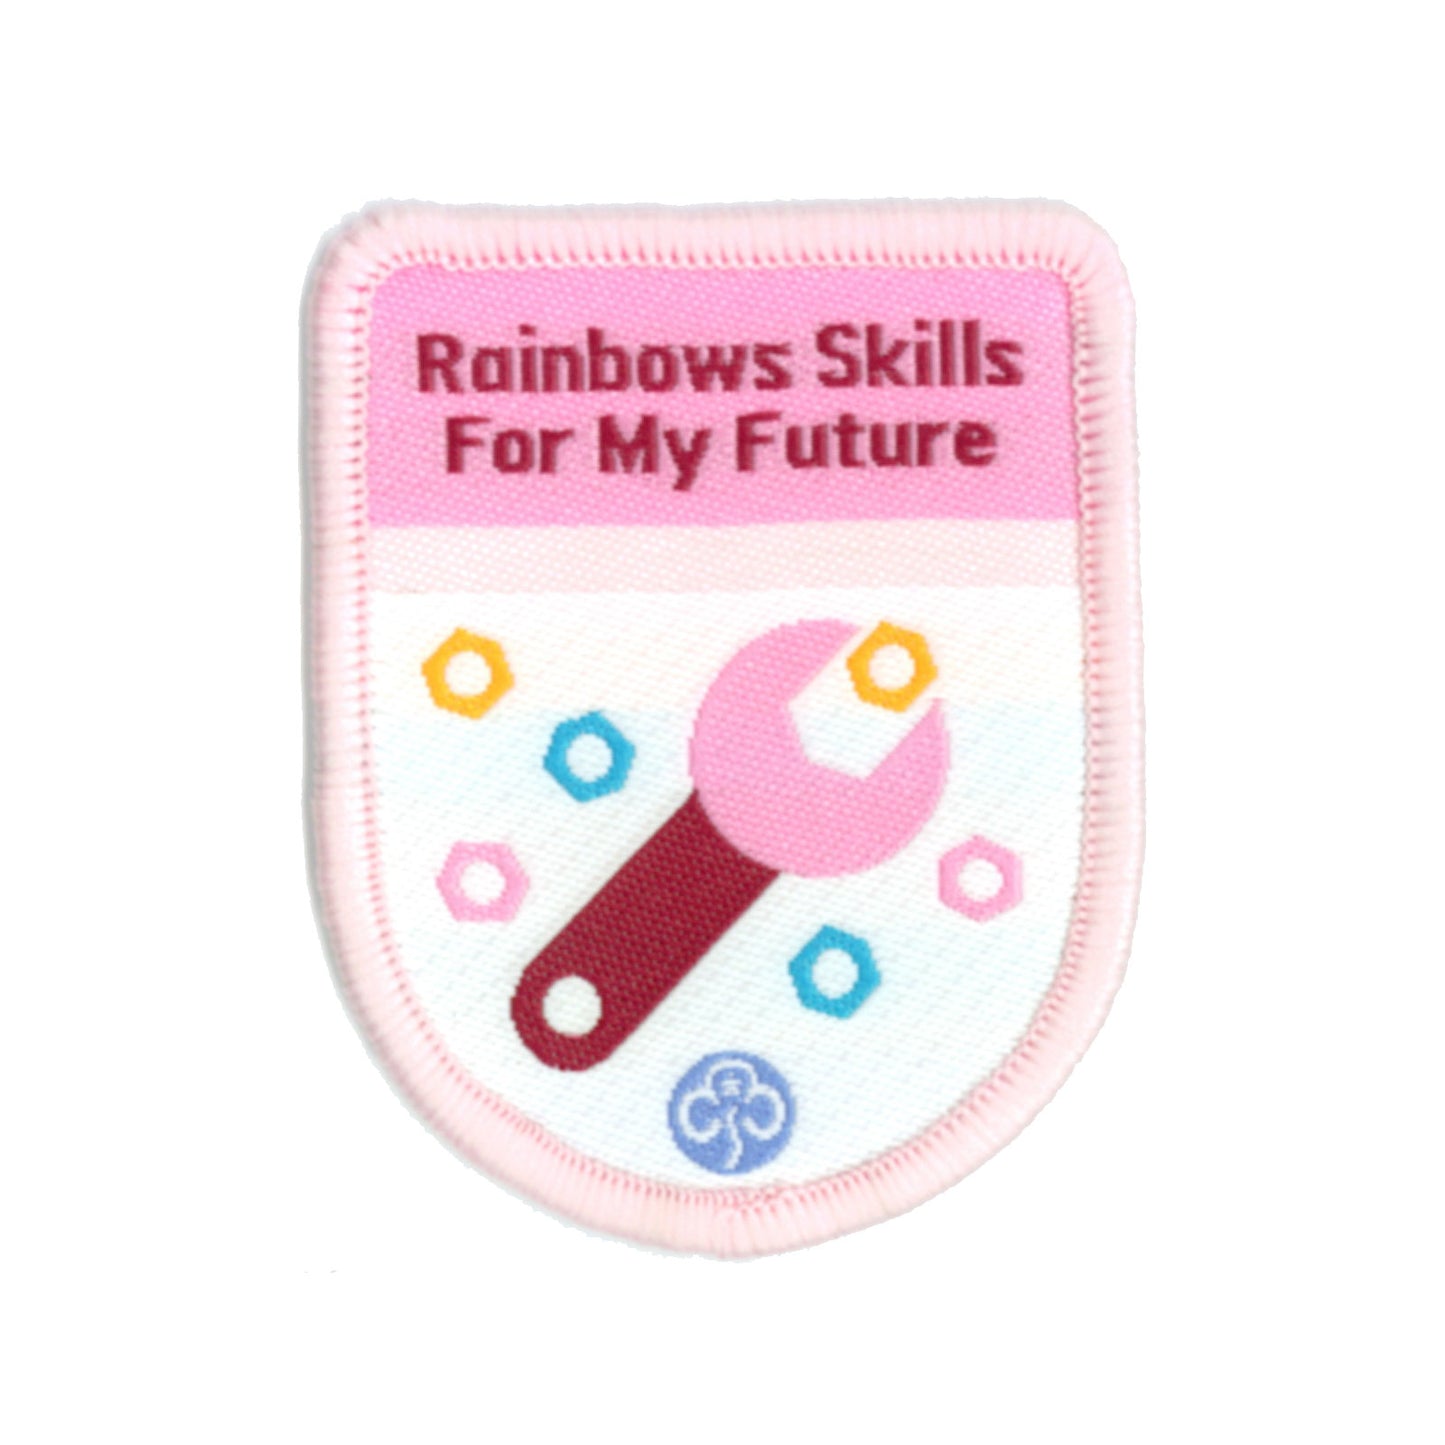 Rainbows Skills For My Future Theme Award Woven Badge